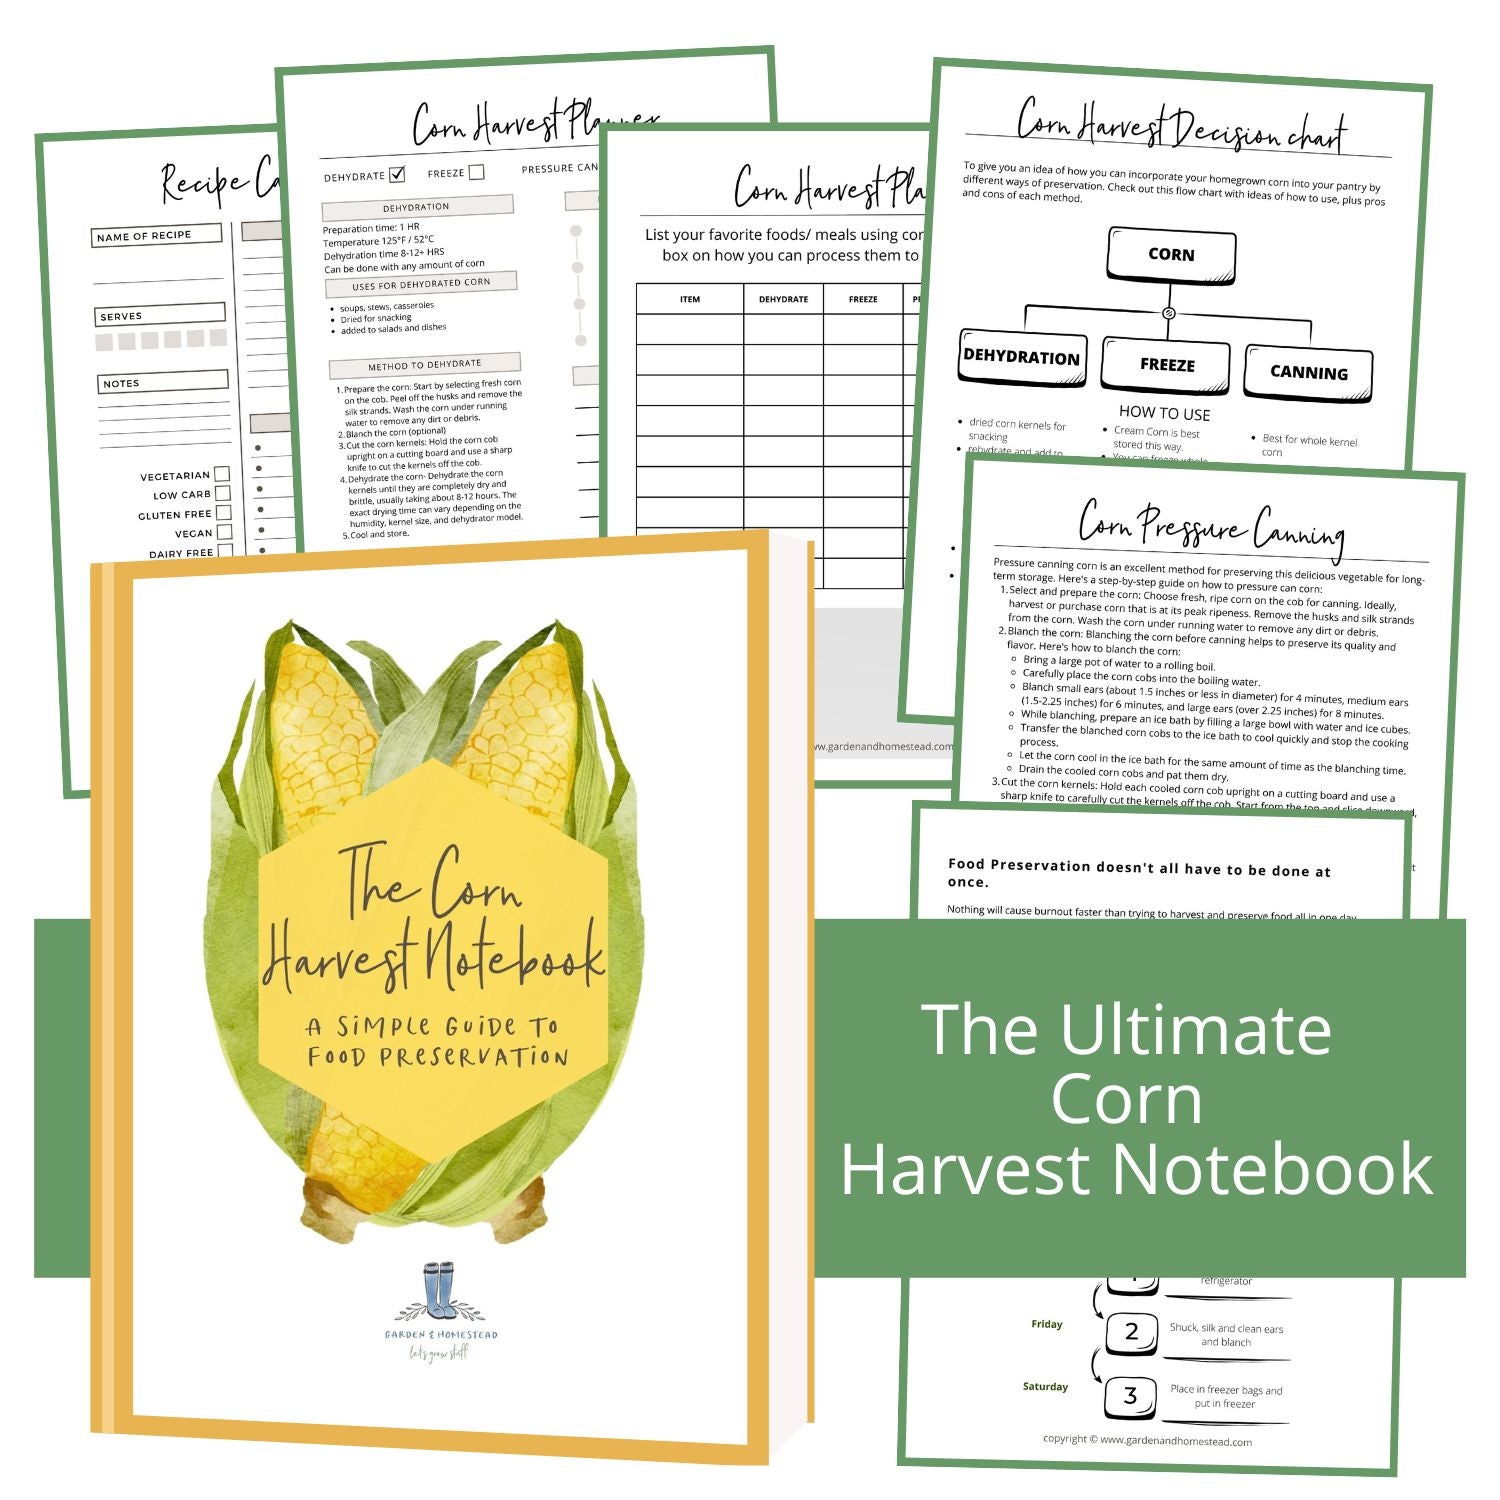 The Corn Harvest Notebook